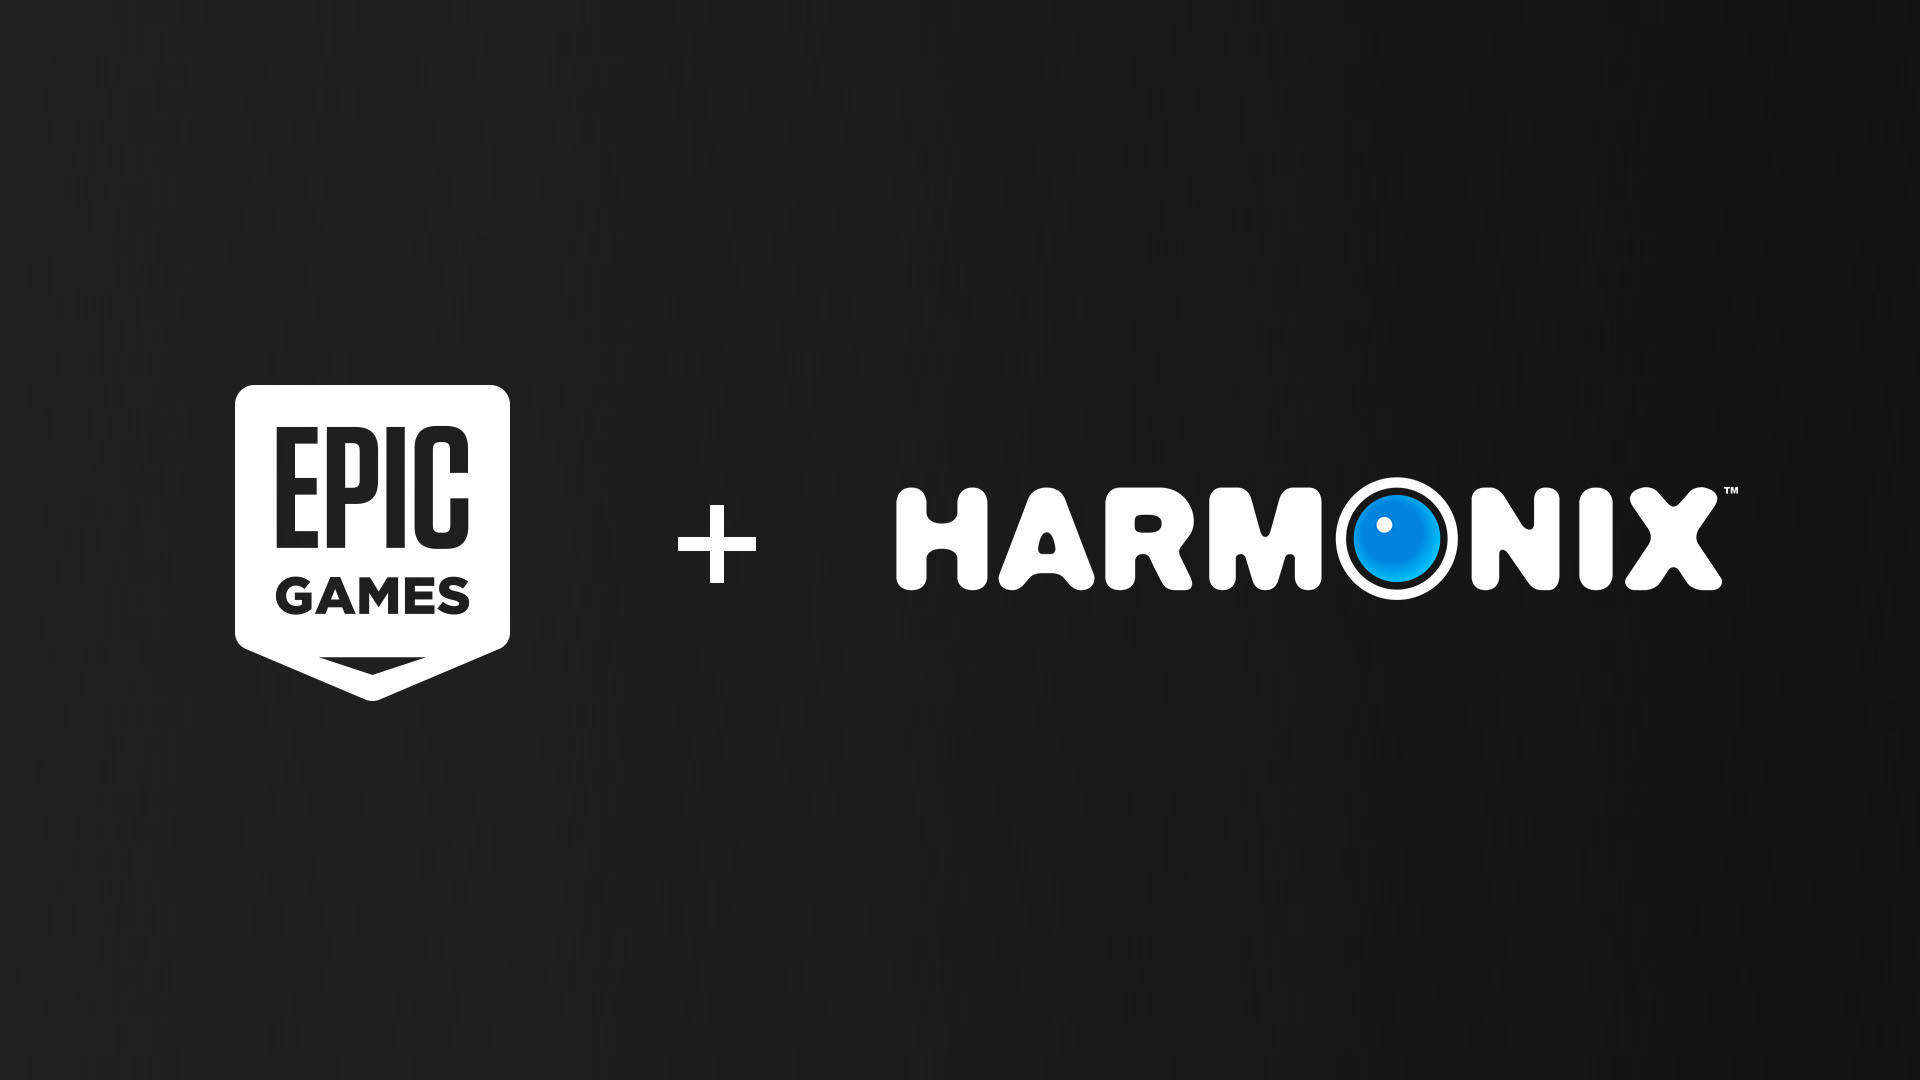 Epic Games acquires Harmonix “to create immersive music experiences”